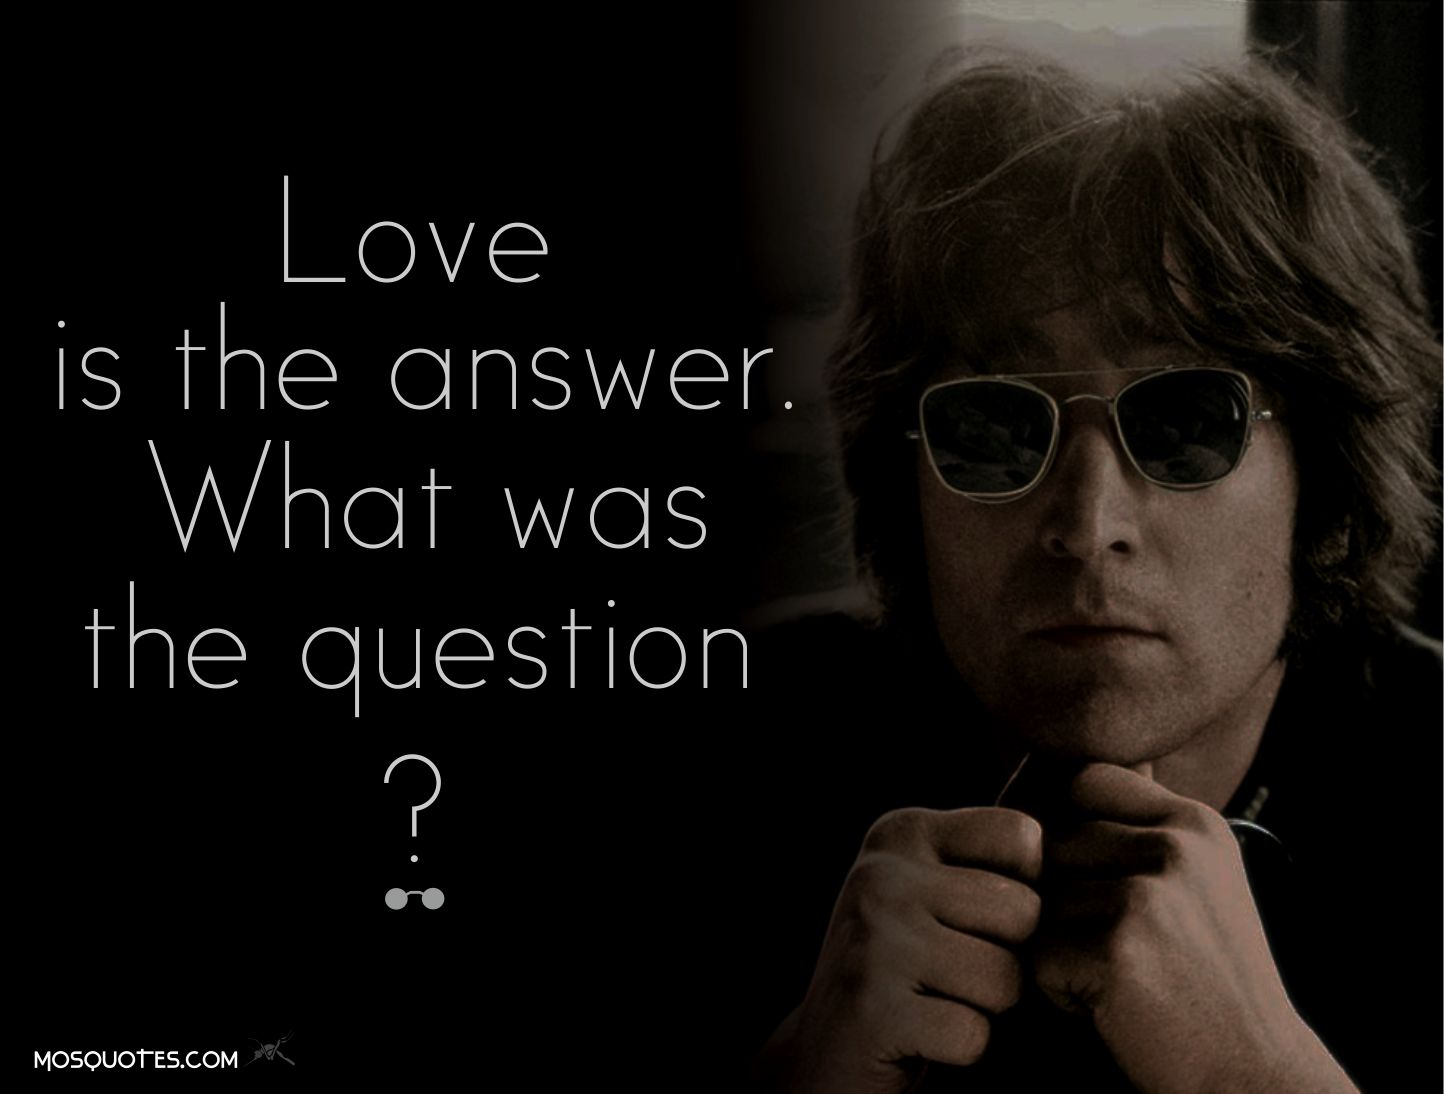 John Lennon Quotes Cover Photos Wallpapers